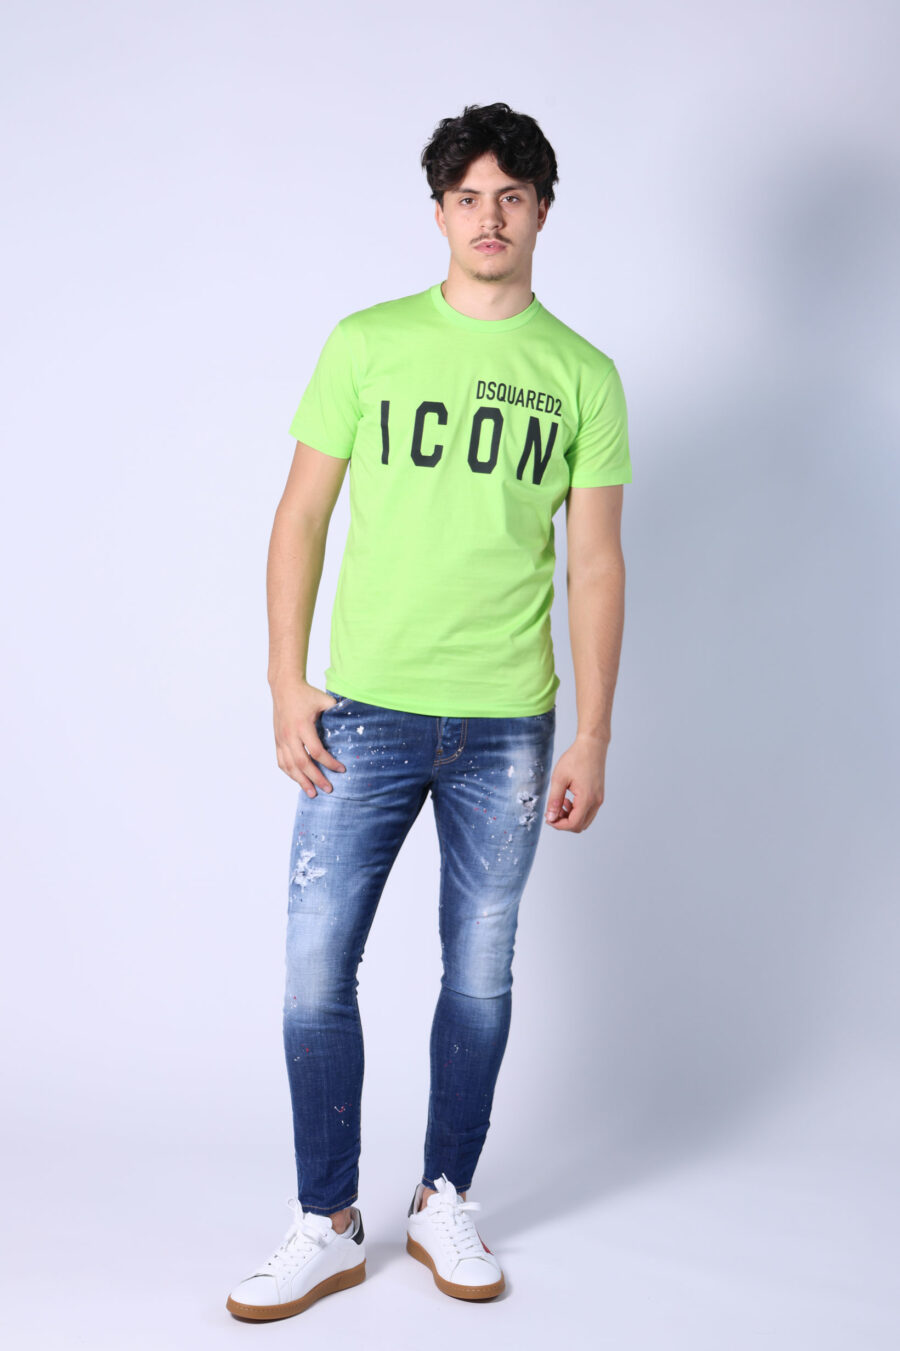 Lime grünes T-Shirt mit schwarzem "Icon" Maxilogo - Untitled Catalog 05394